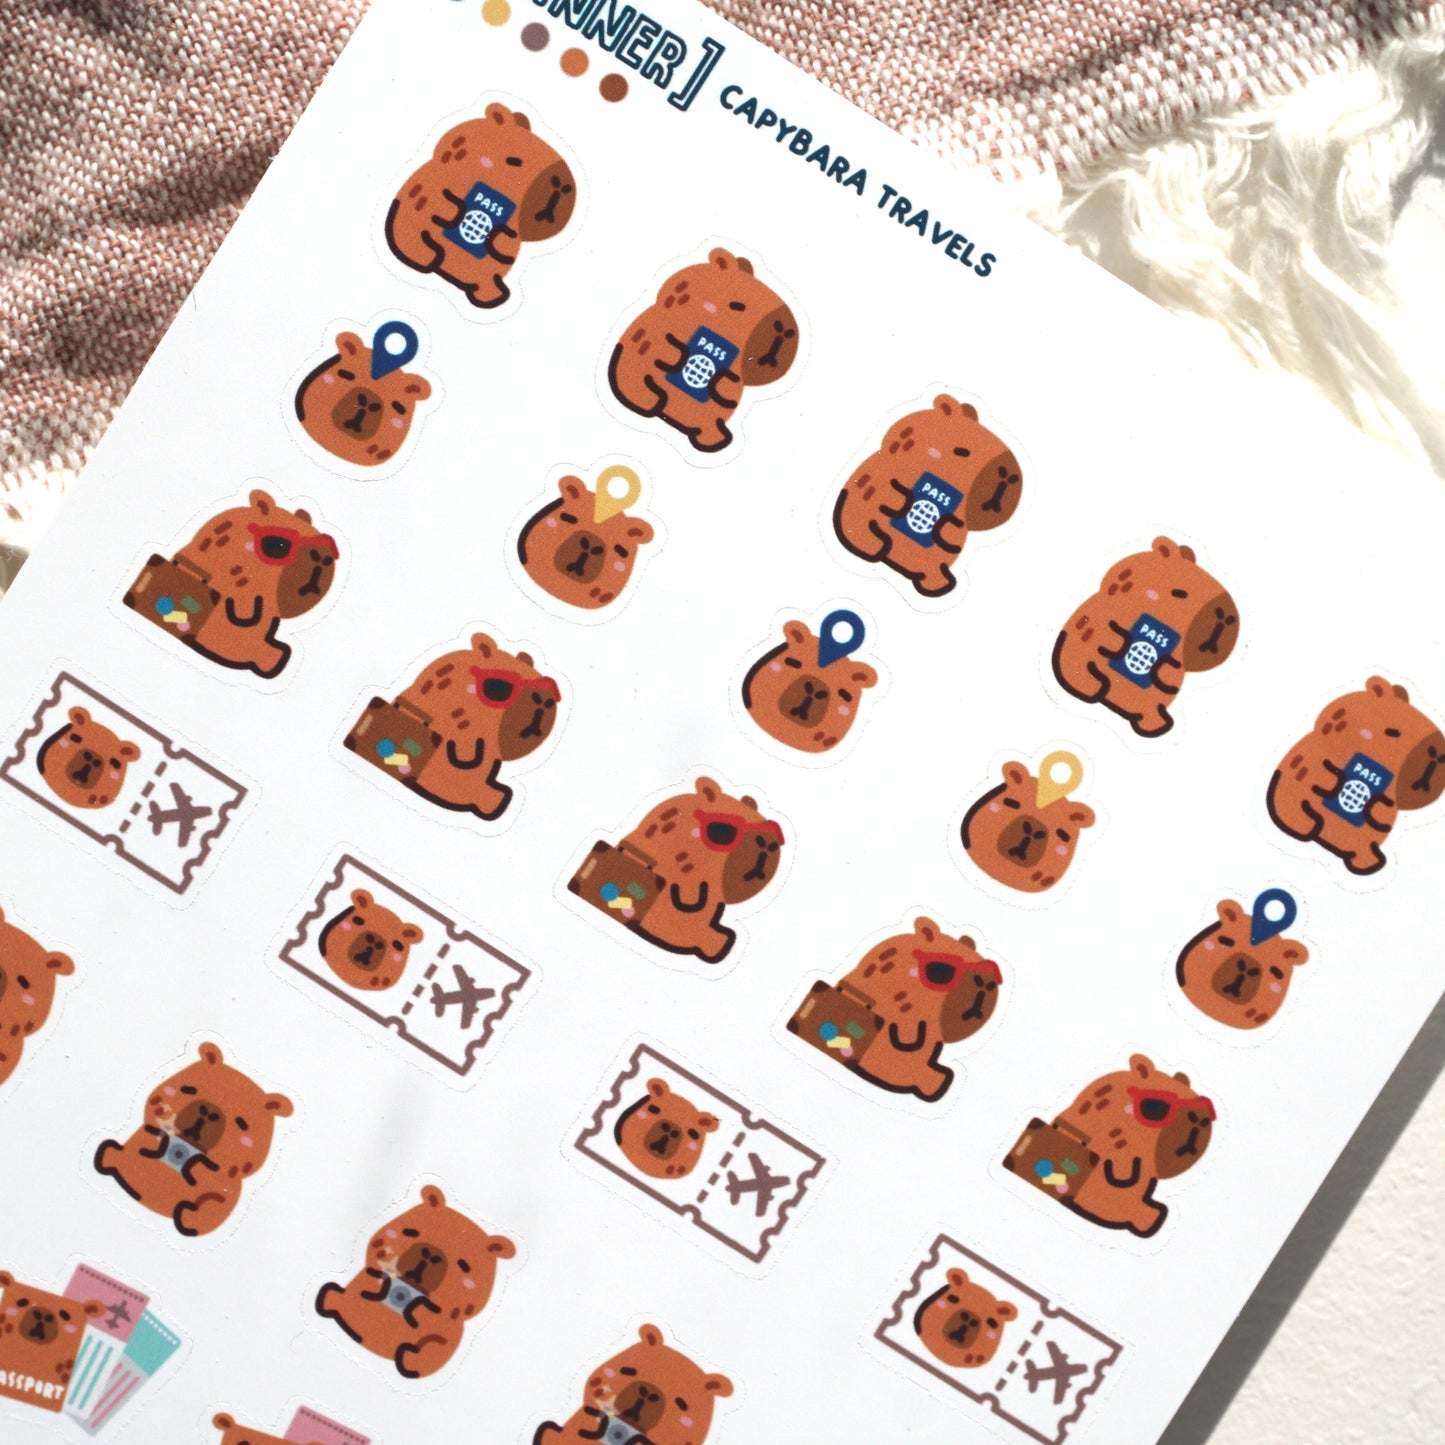 Capybara Travels Sticker Sheet